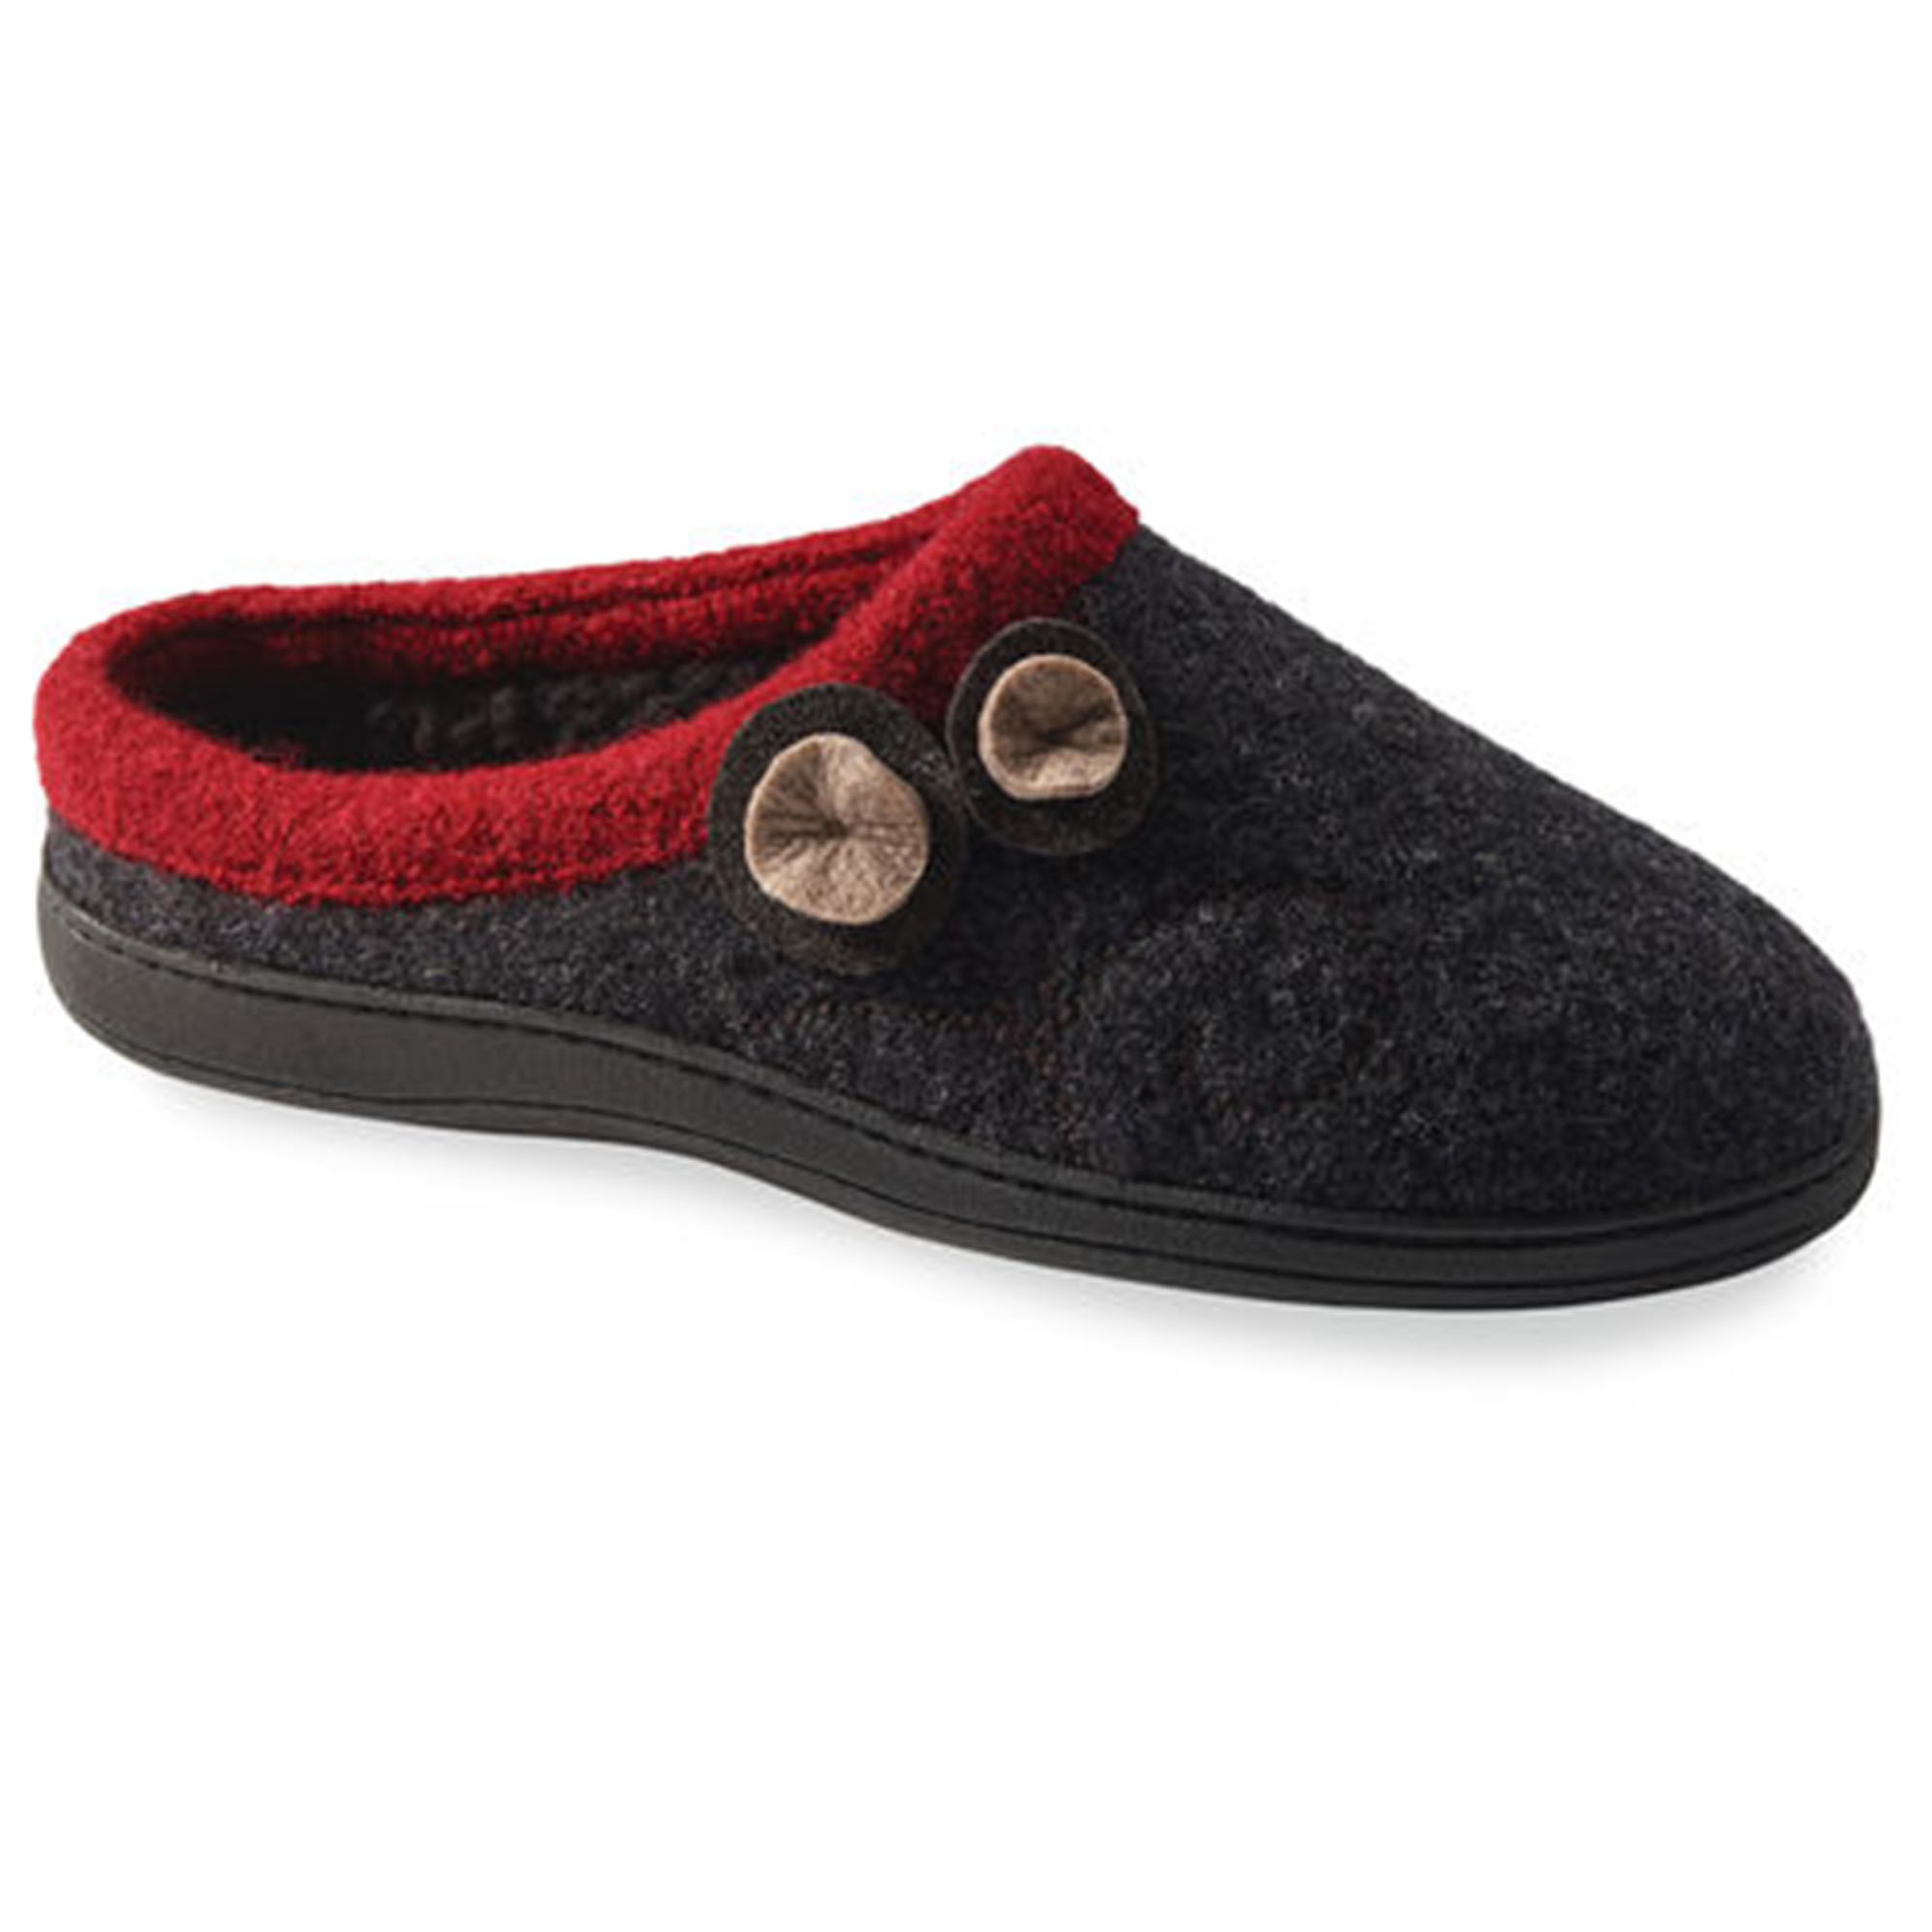 acorn wool slippers